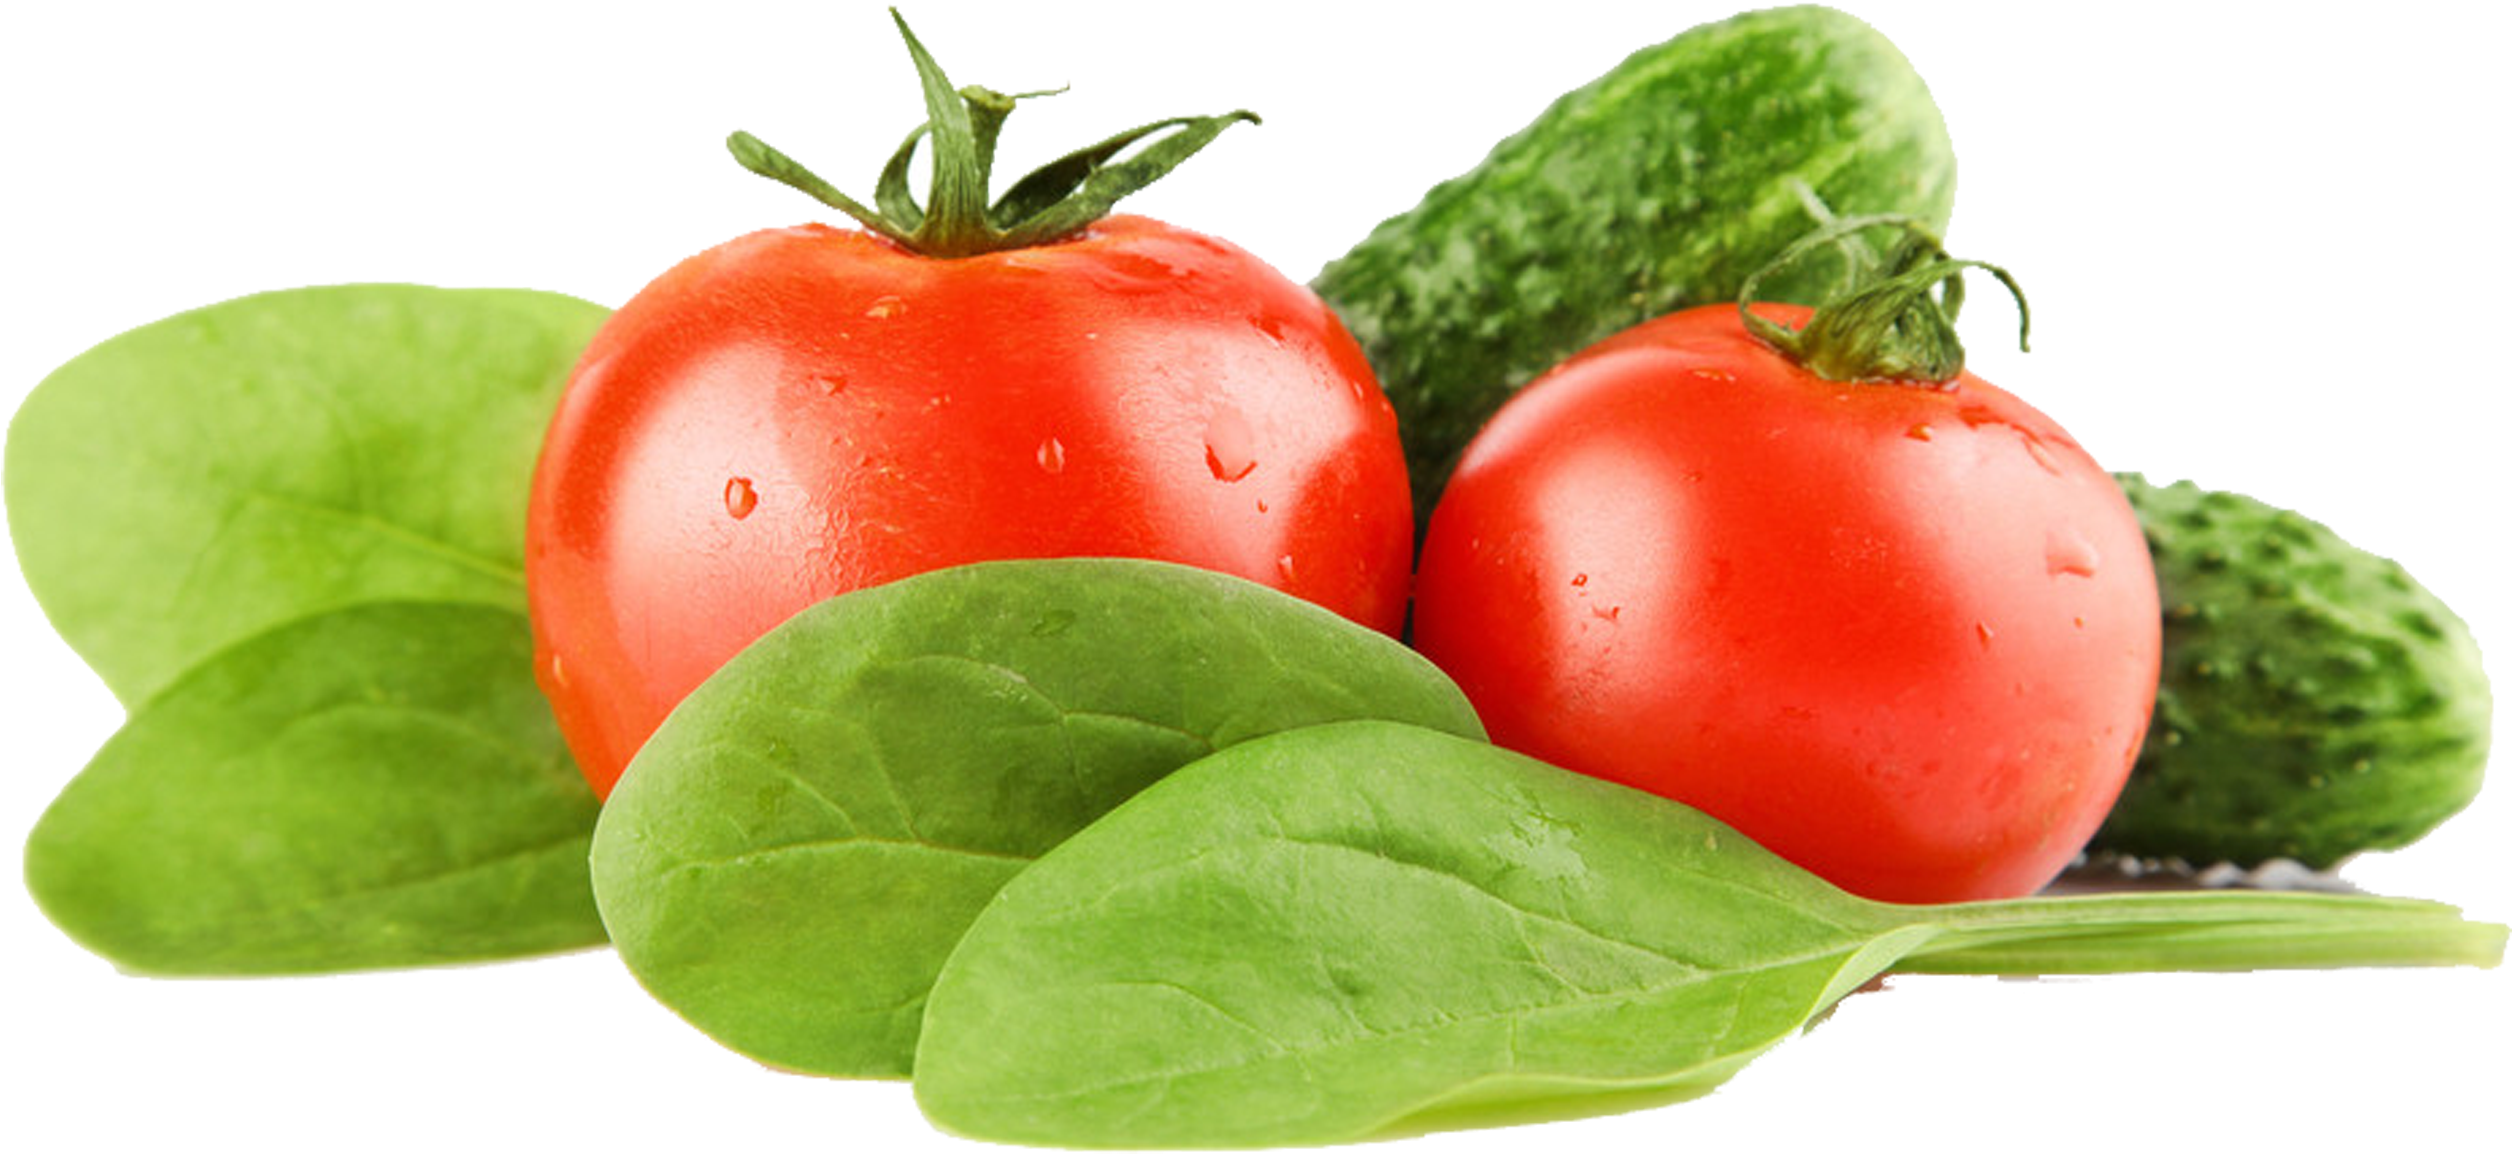 Juicer Vegetable Tomato - Inmaker Stainless Steel Vegetable Steamer Basket (2953x2953)